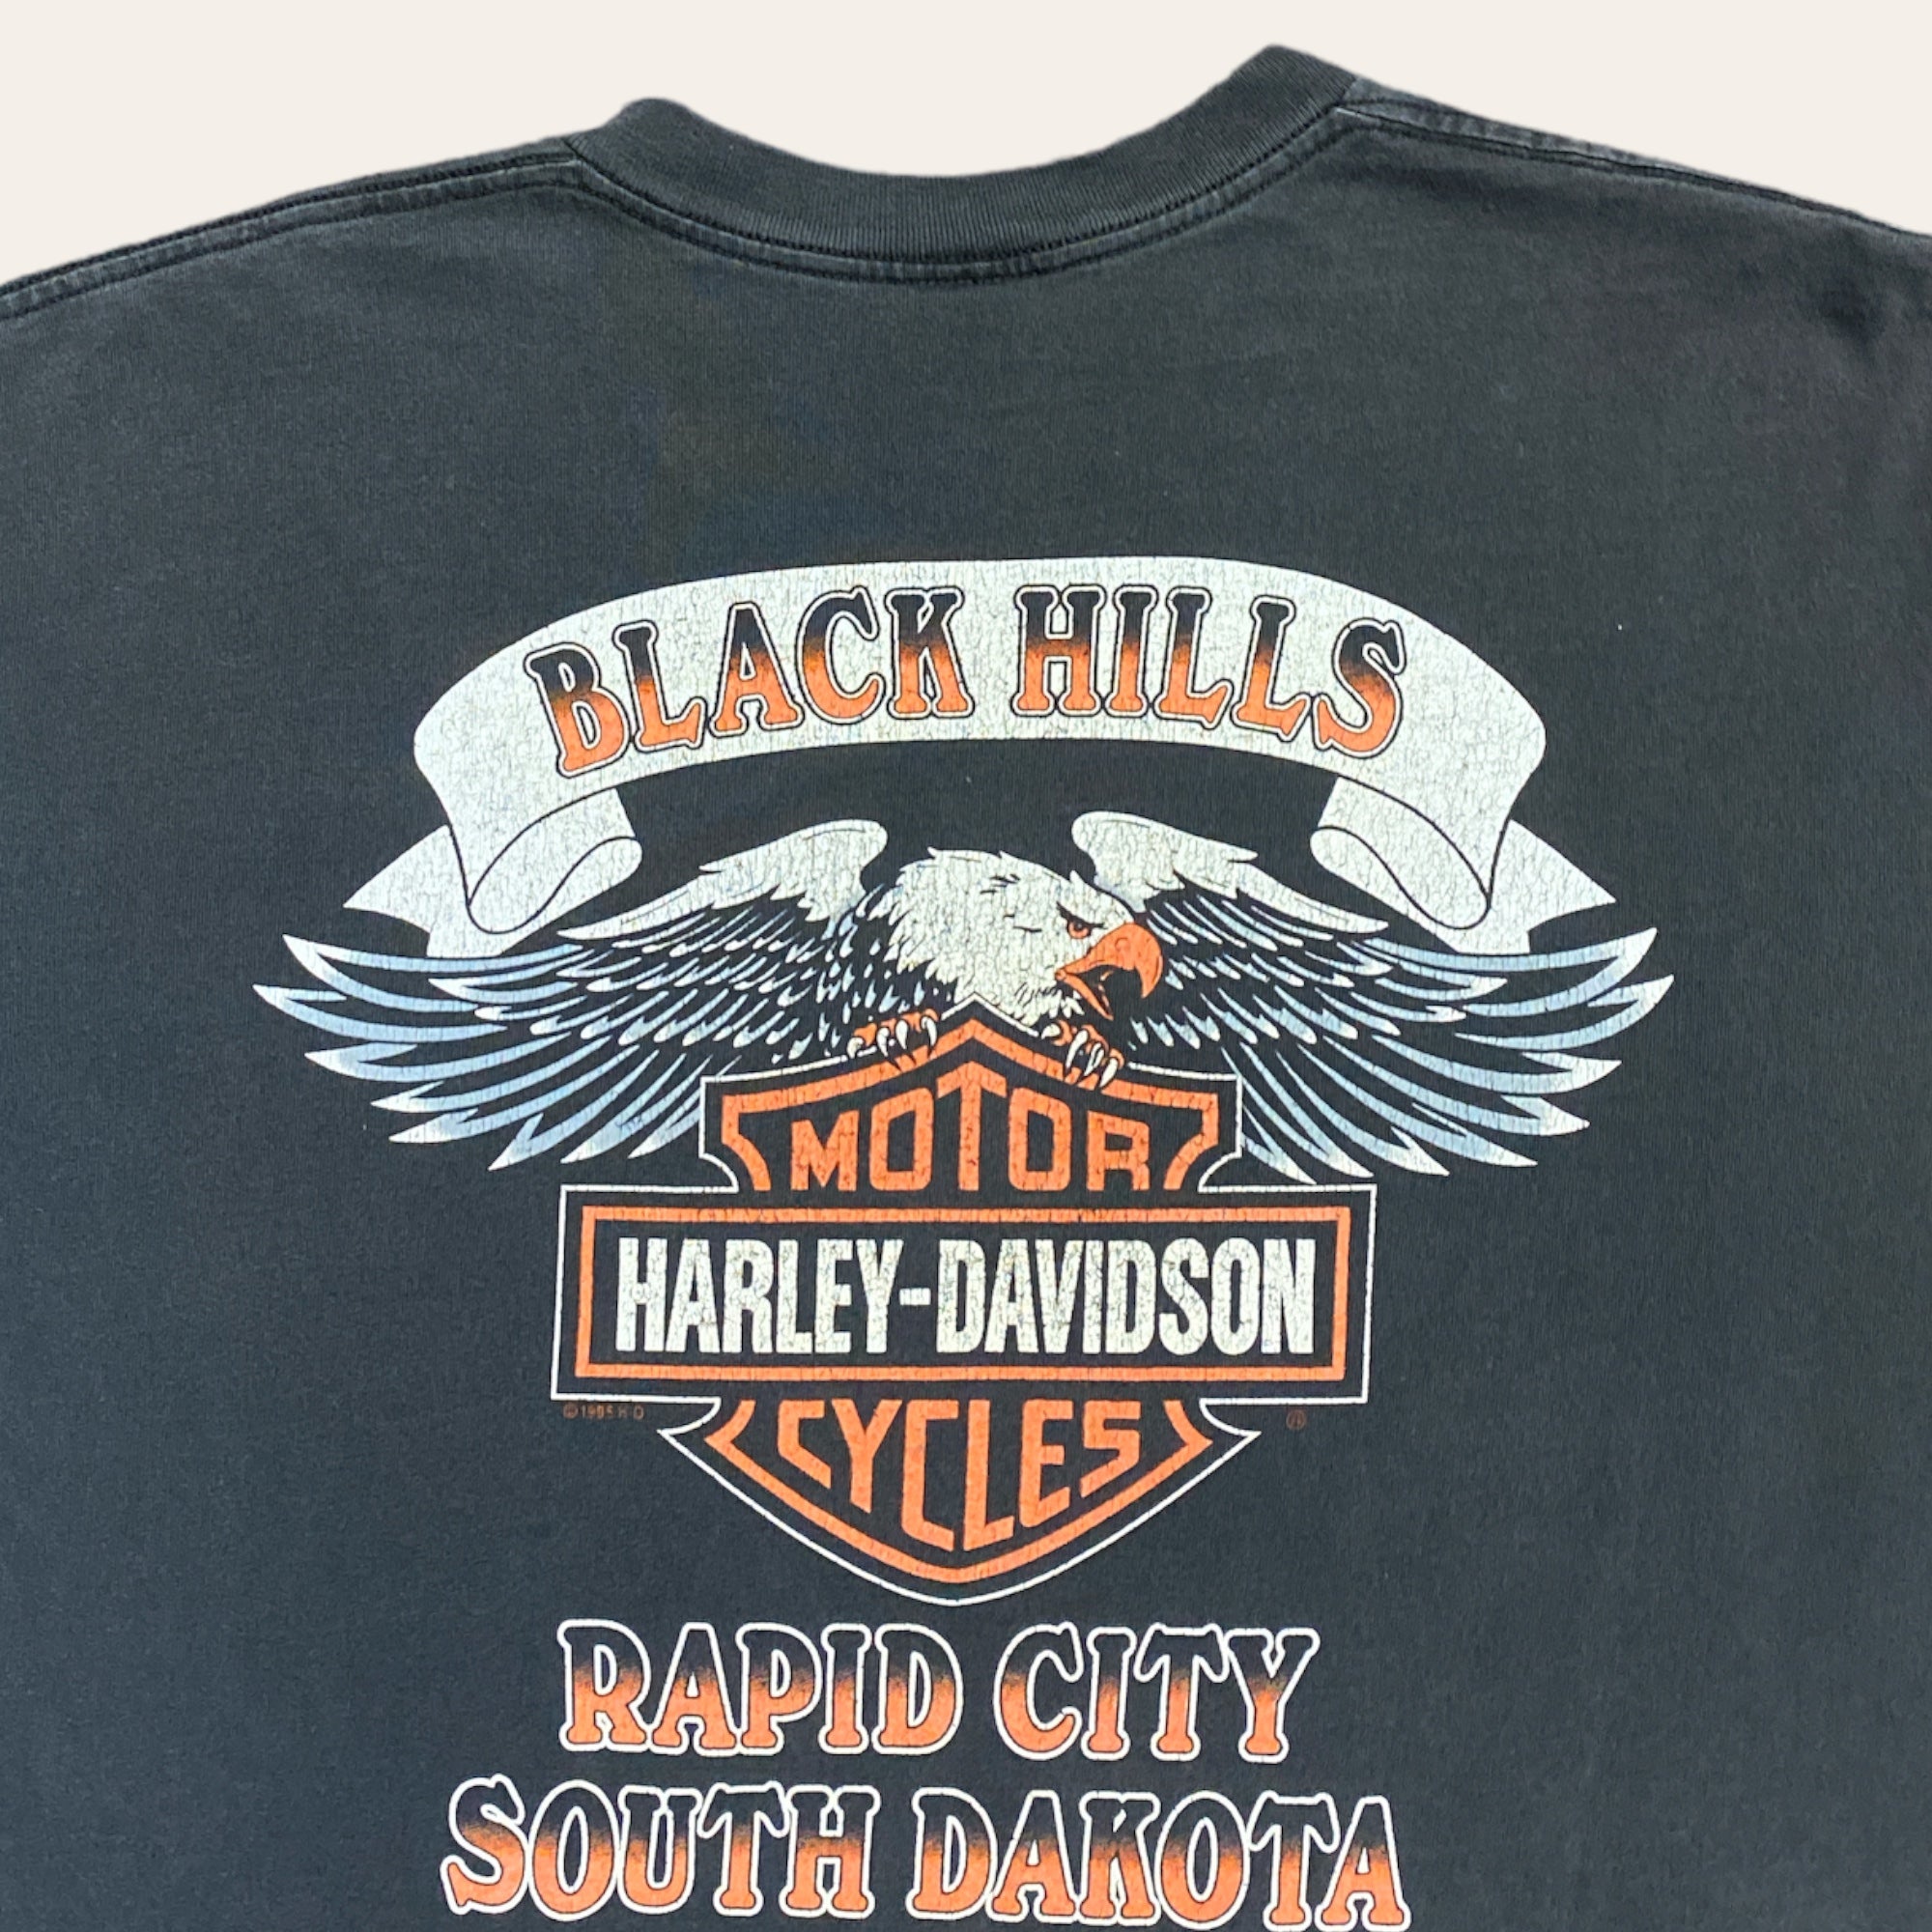 1996 Harley Davidson South Dakota Tee Size XL